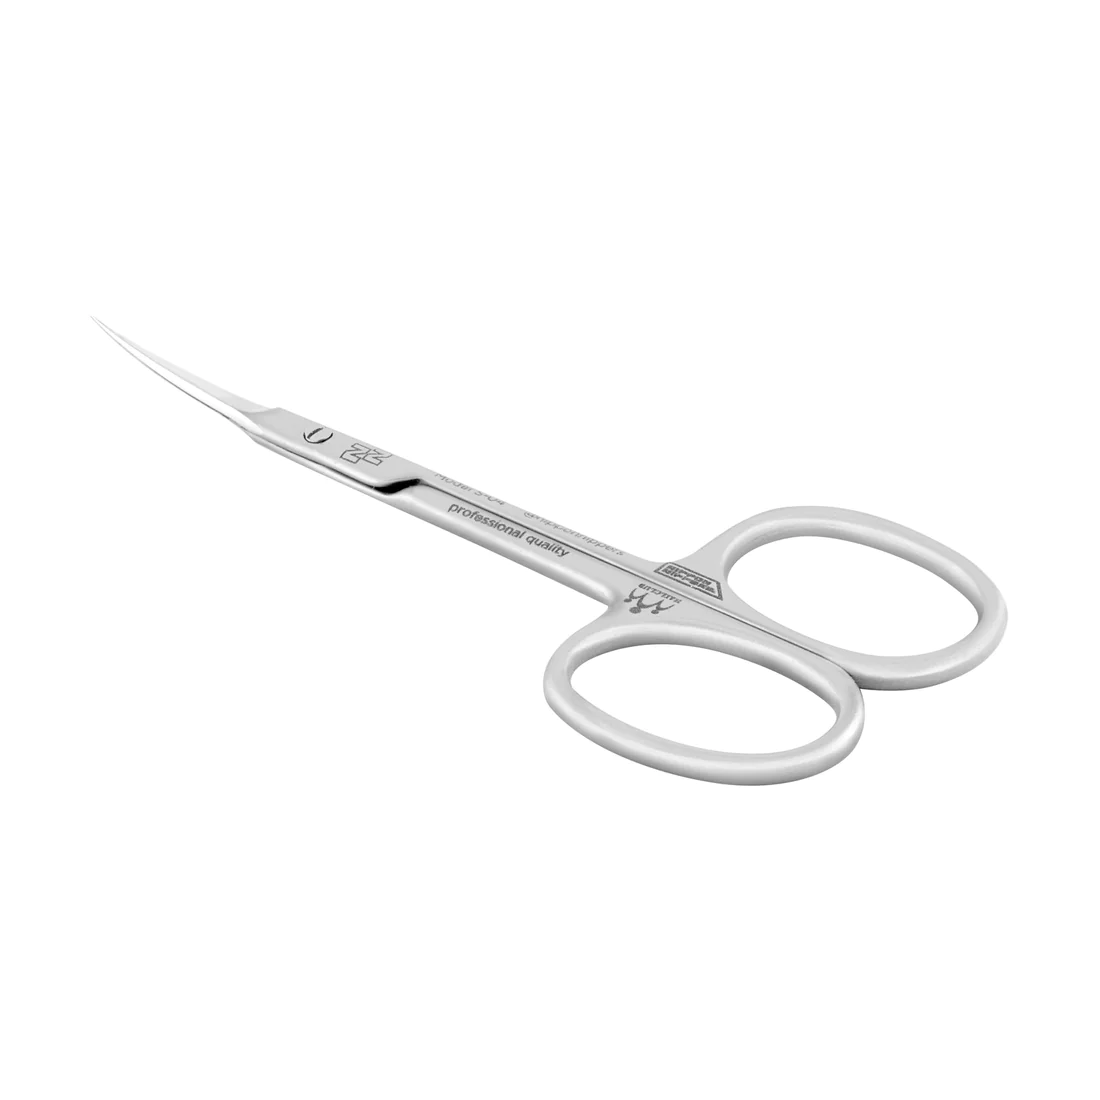 NIPPON NIPPERS Cuticle scissors S-04